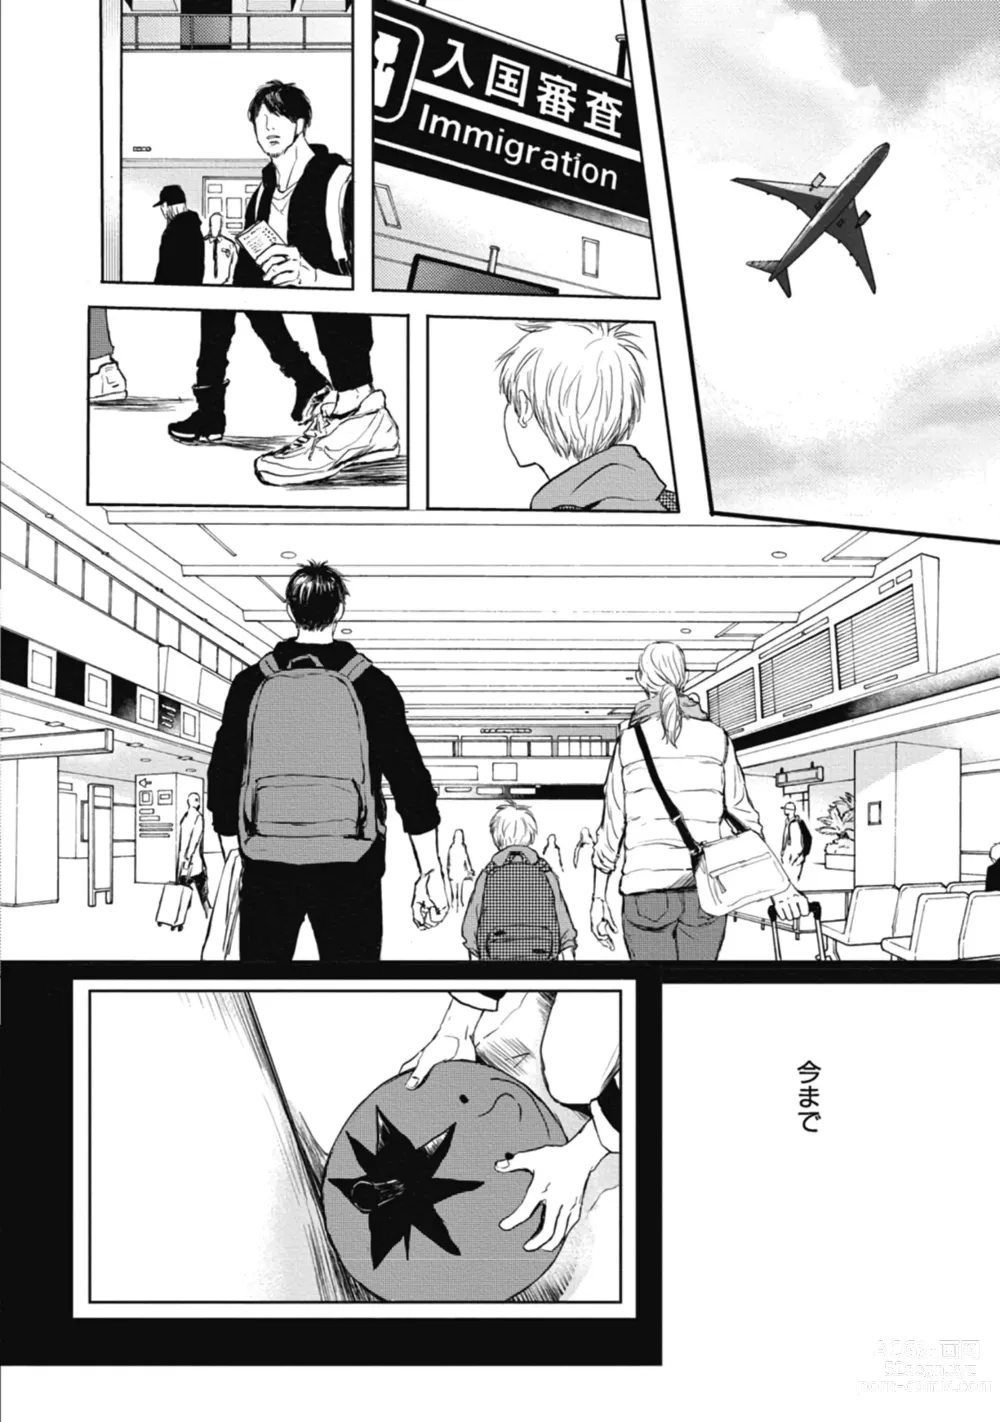 Page 138 of manga Papas Assassin. ~Futari Shite Tonde Yuku.~